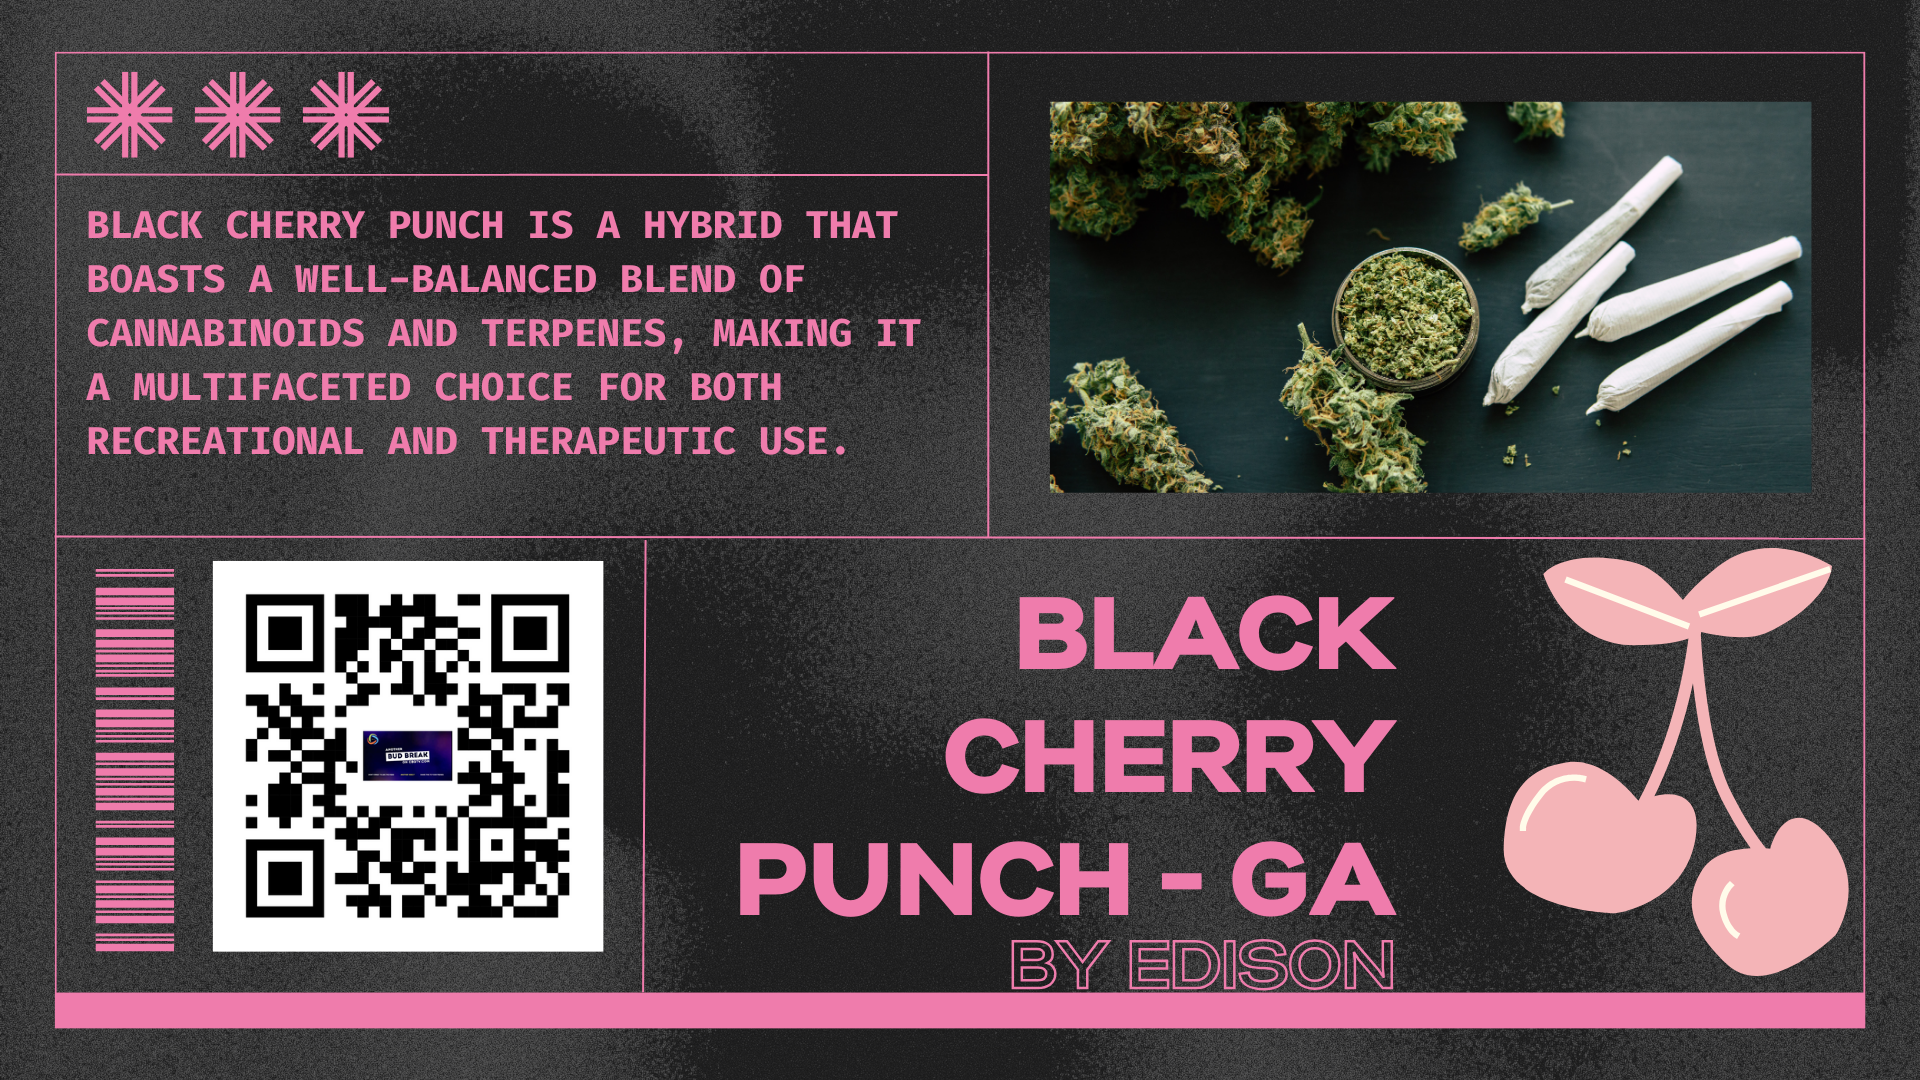 Black Cherry Punch – GA by Edison